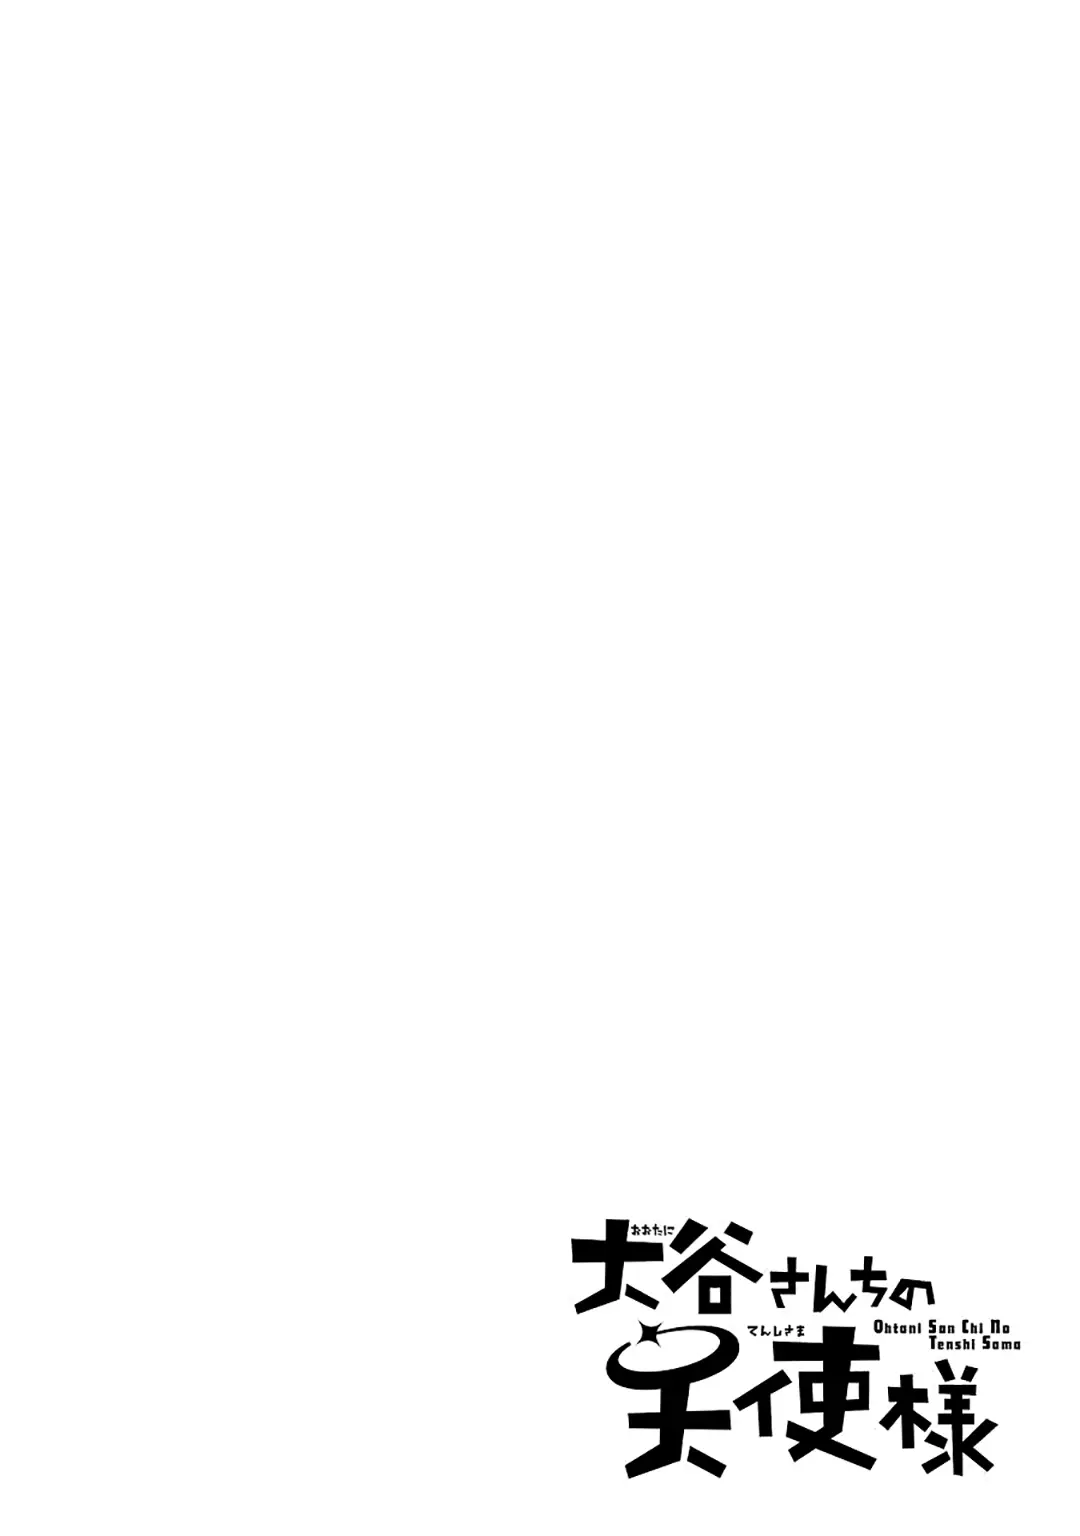 Ootani-San Chi No Tenshi-Sama - 12 page 11